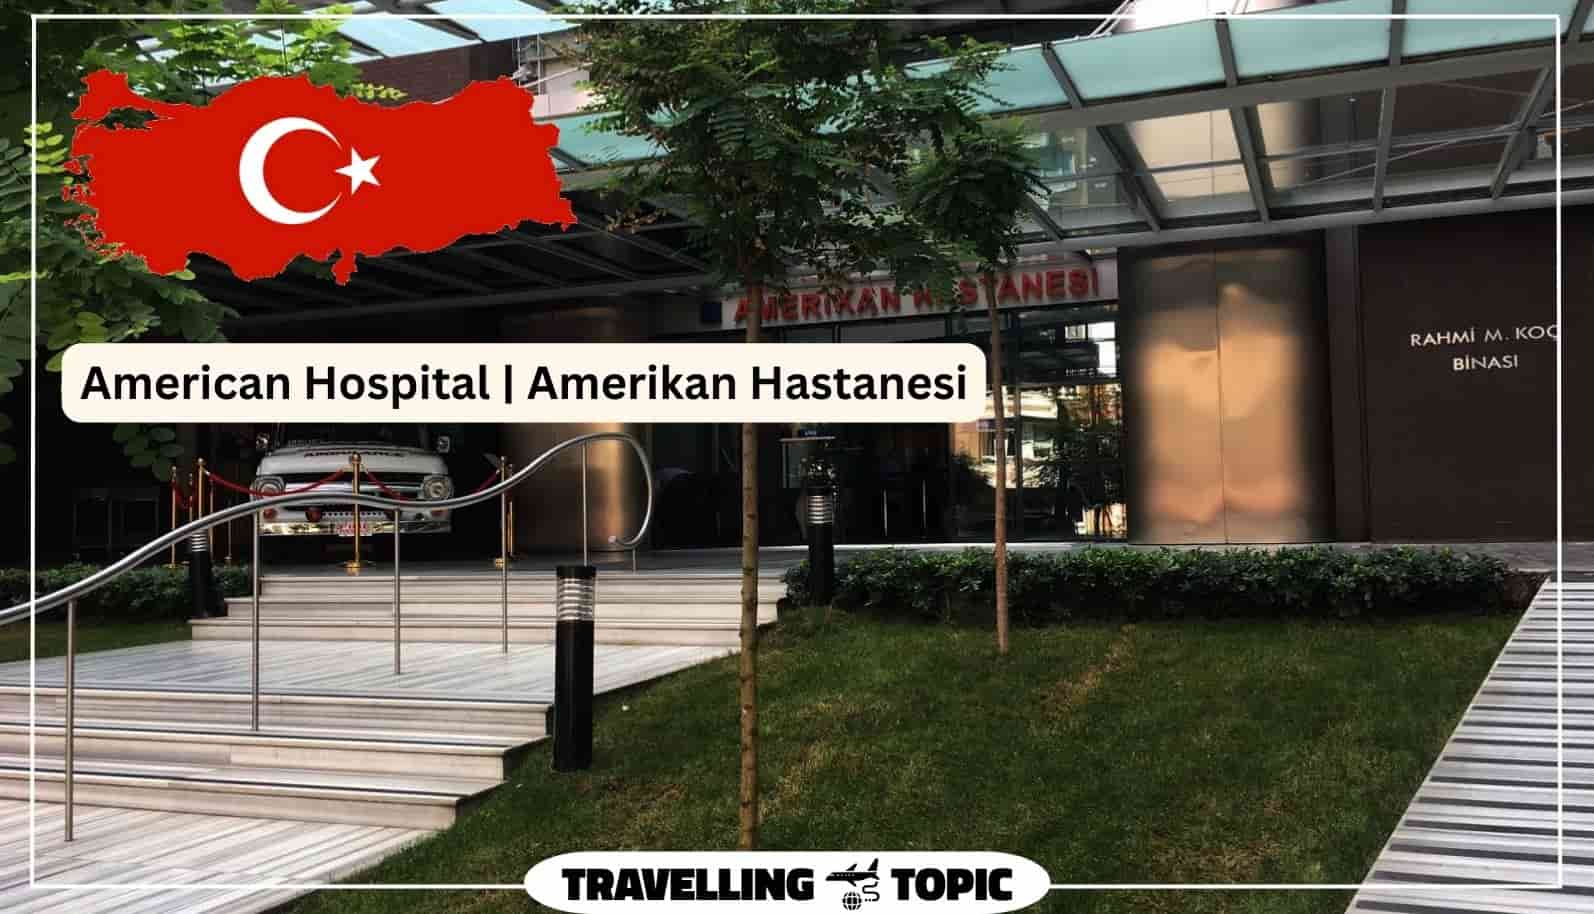 American Hospital Amerikan Hastanesi